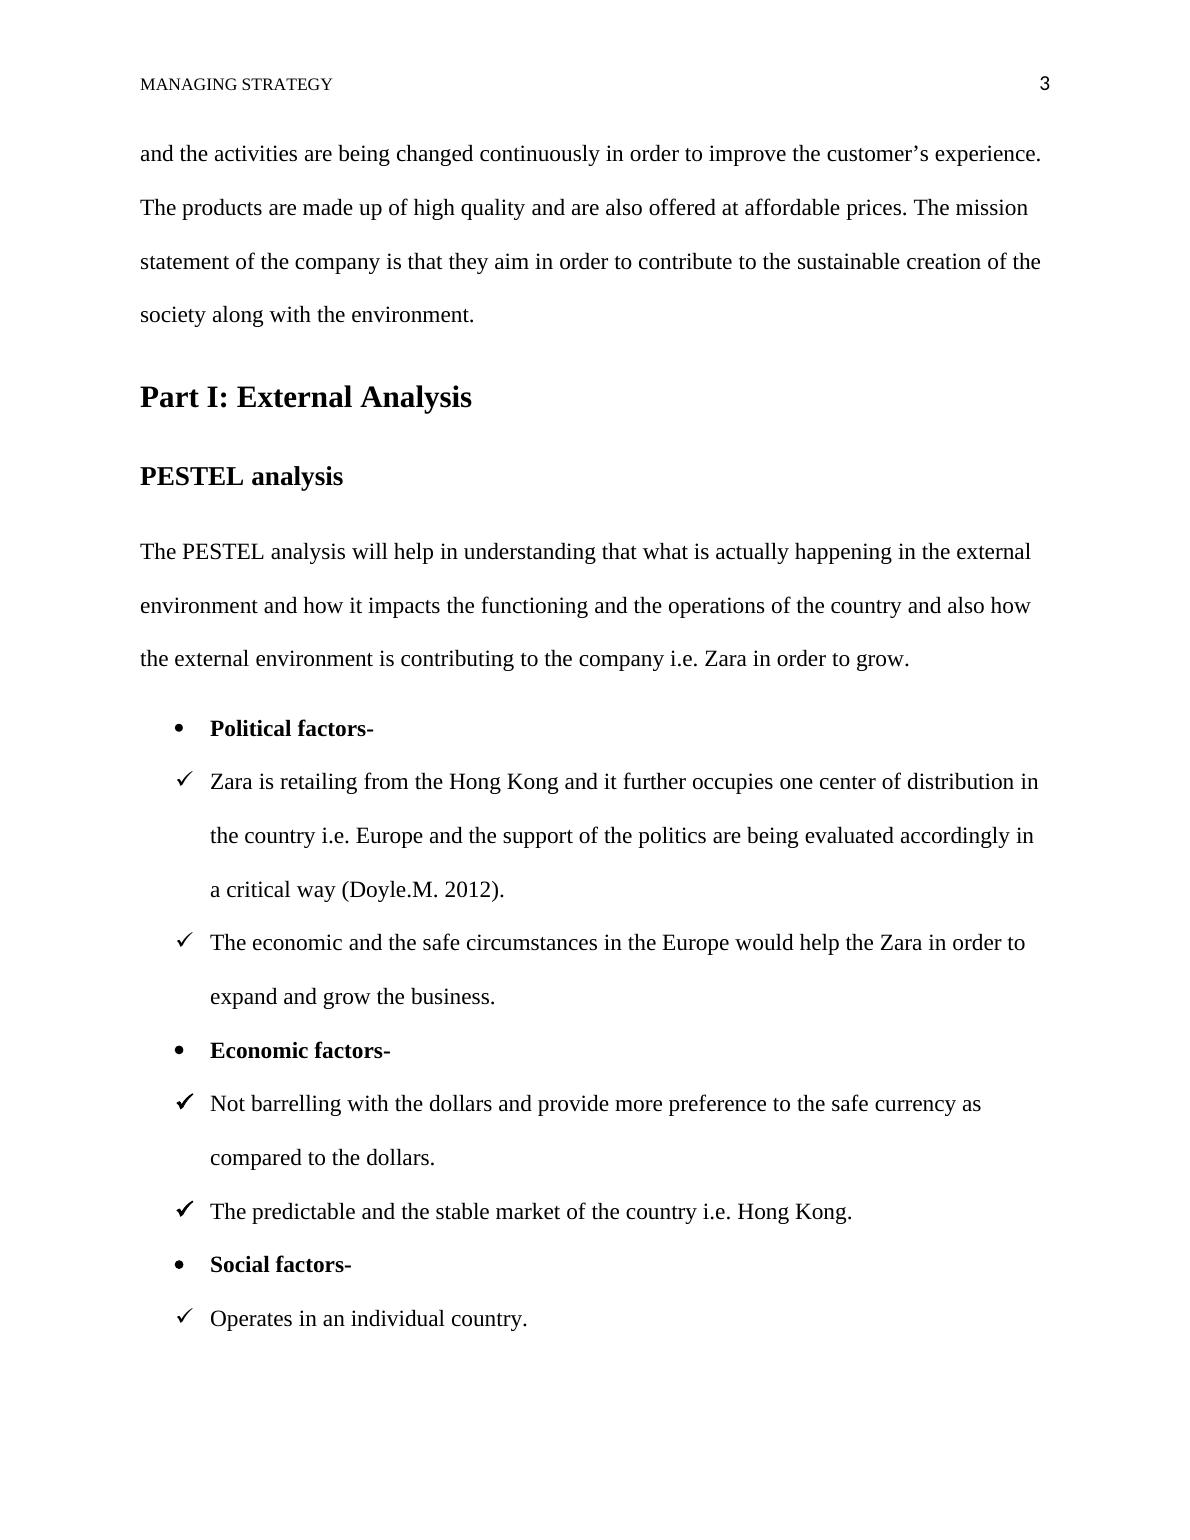 Full Strategic Appraisal of Zara: External and Internal Analysis_4